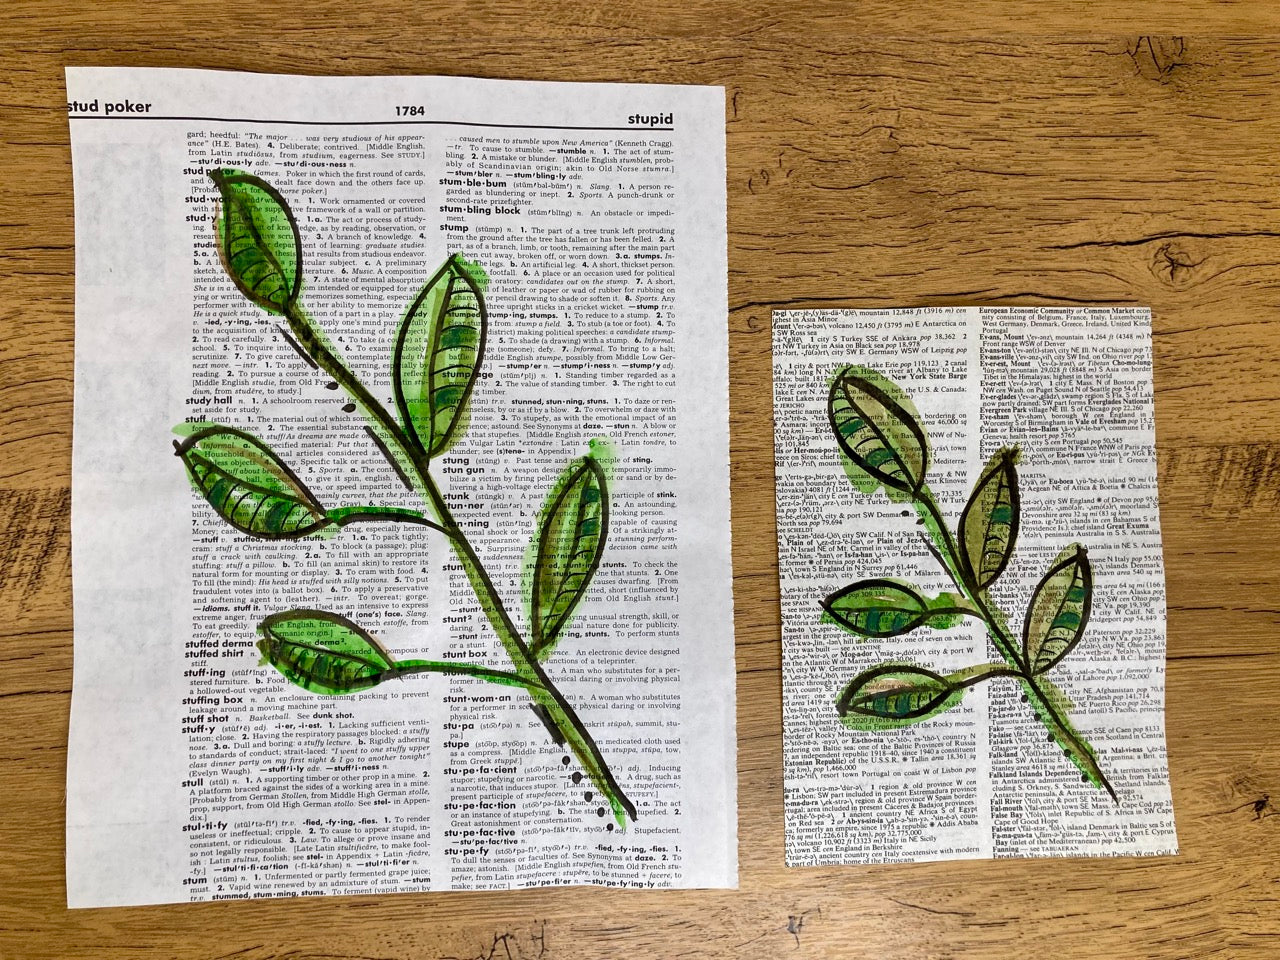 Botanical Leaf Series: Ash, Vintage Dictionary Paper, Original Painting